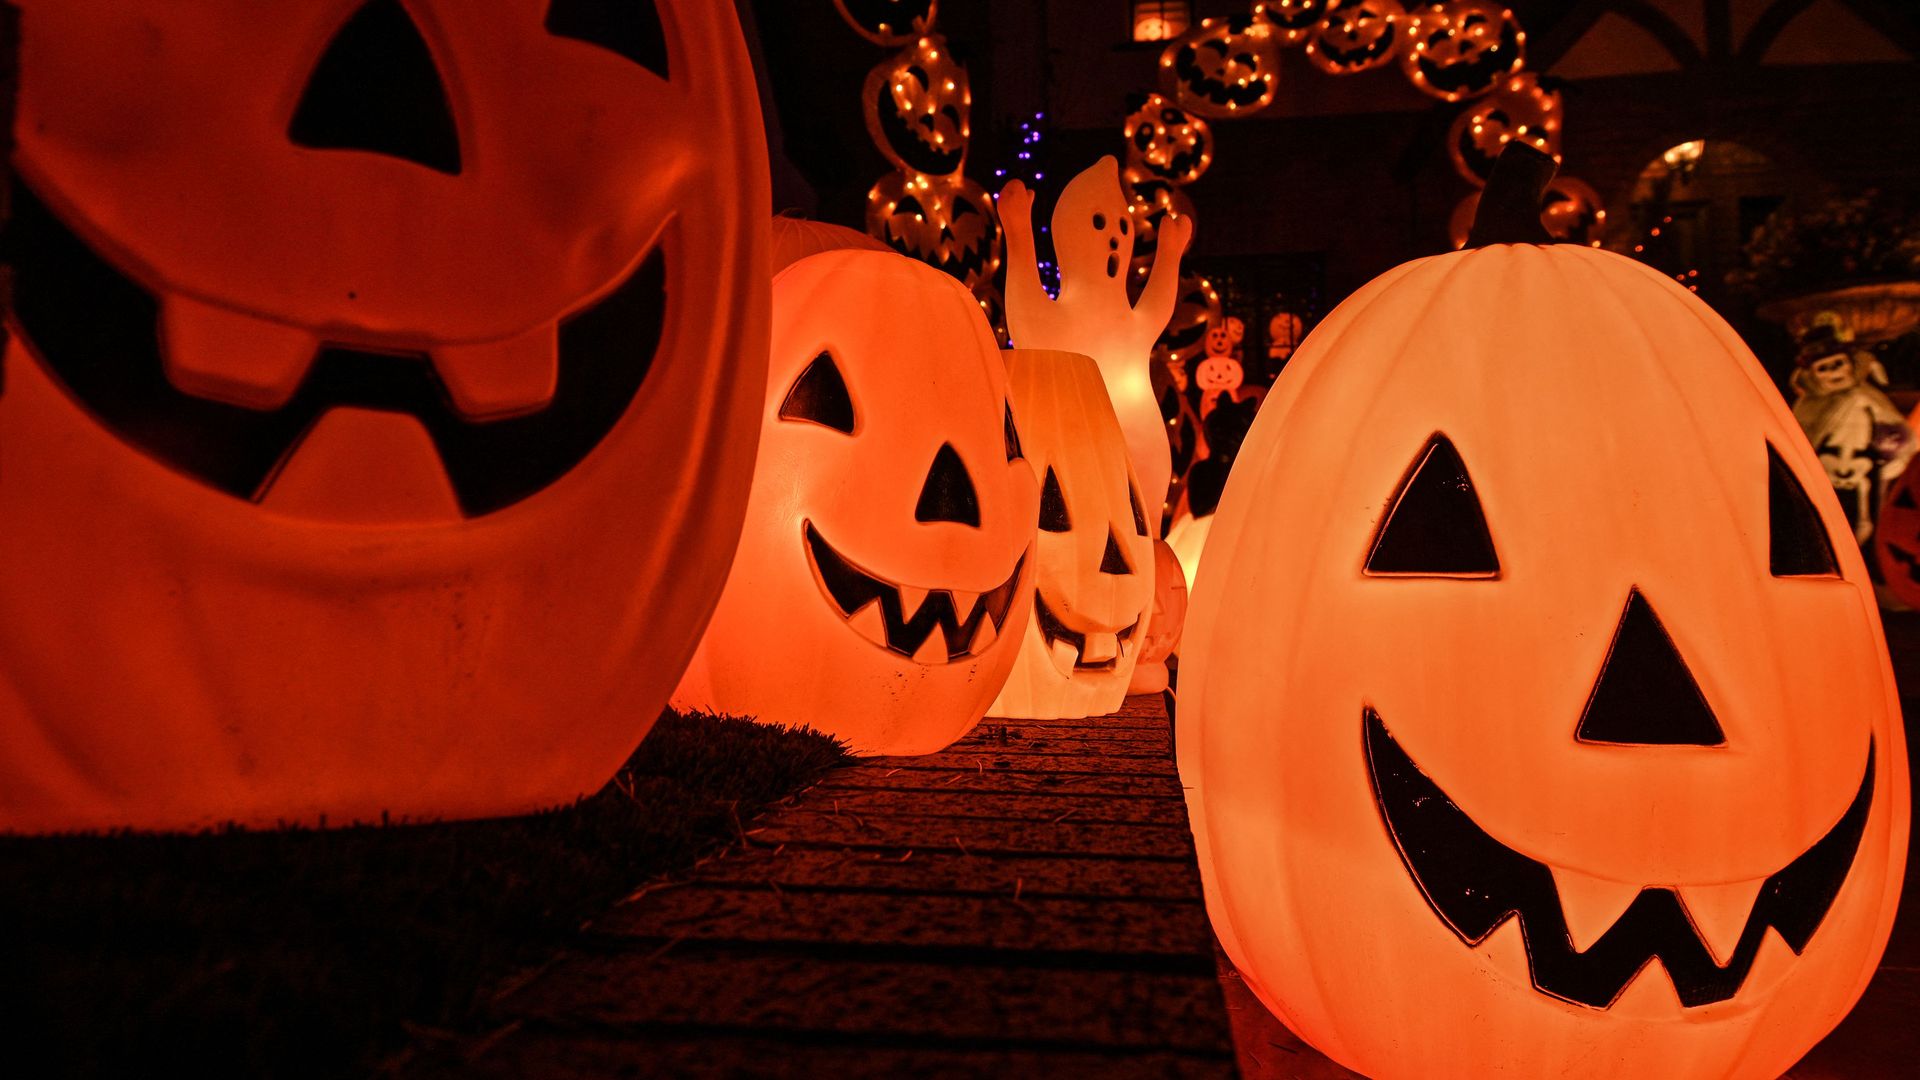 Halloween decorations including giant pumpkins lit up